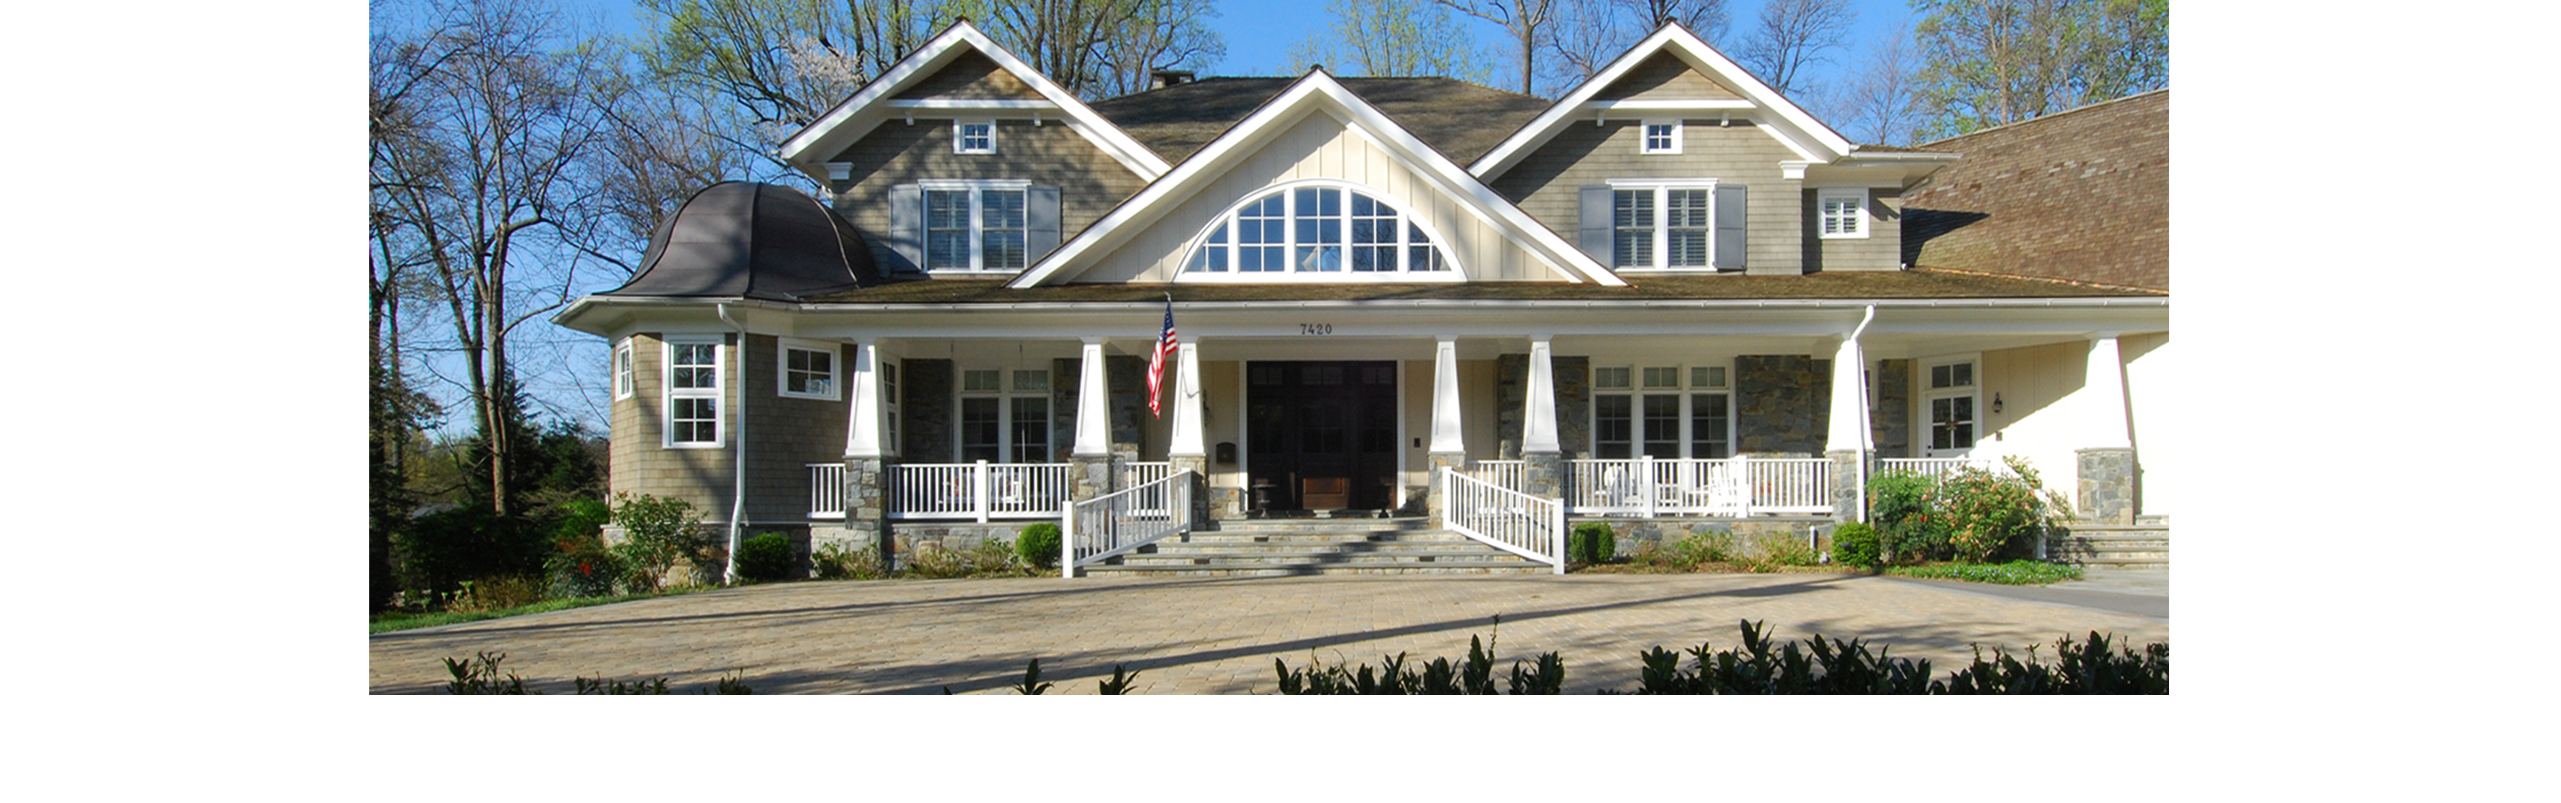 Custom home in Maryland Sutton Yantis Associates Architects